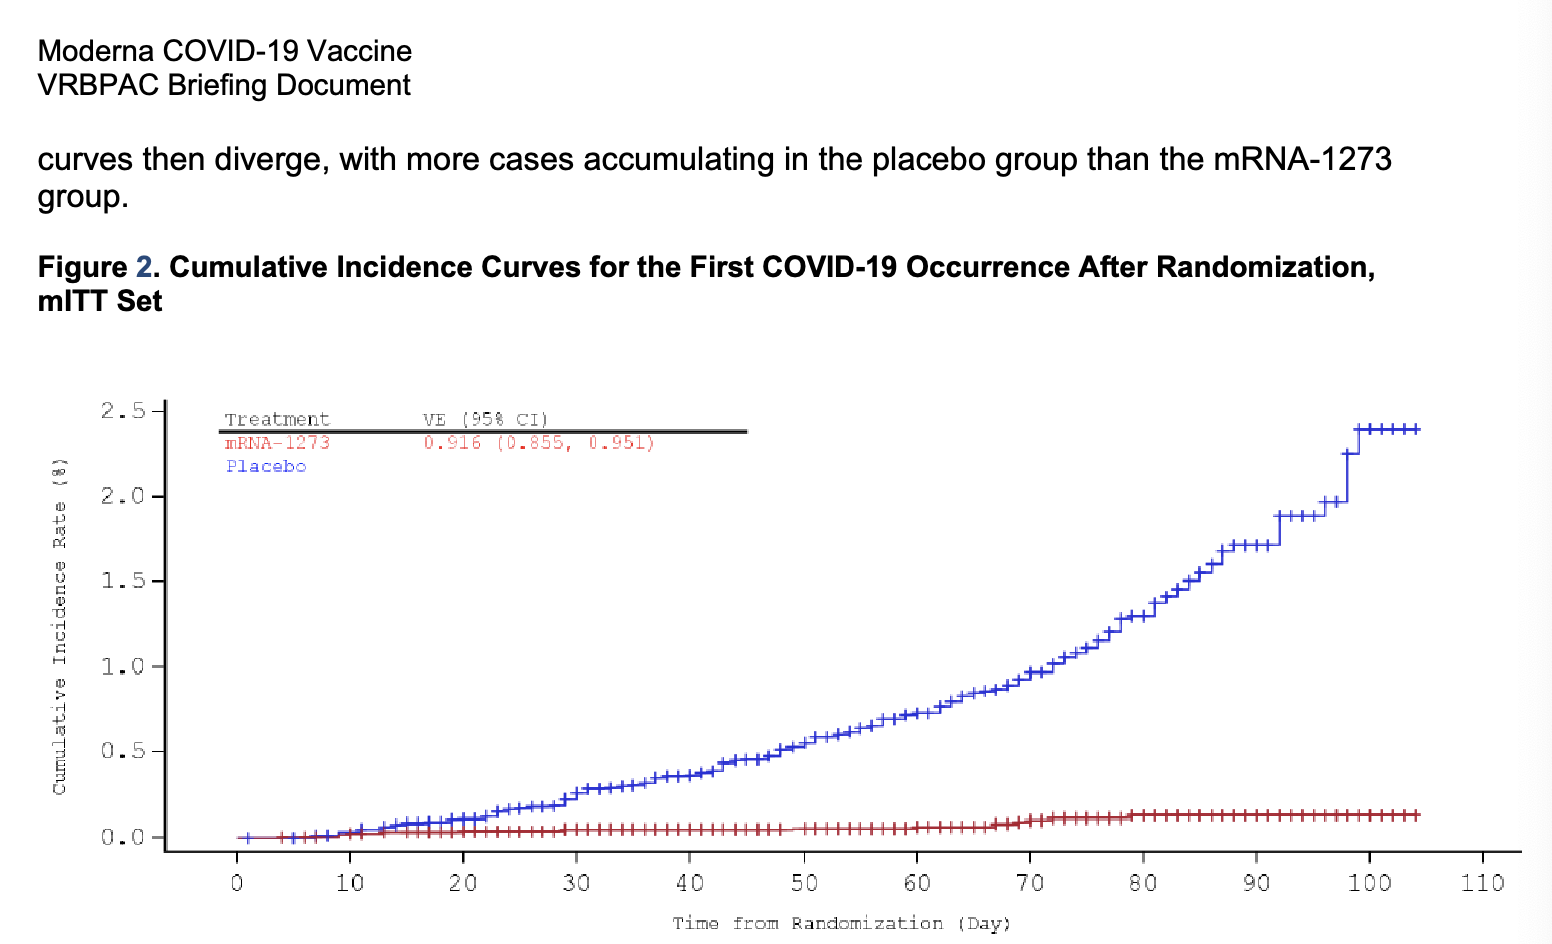 FDA report https://www.fda.gov/media/144434/download page 28
   showing effectiveness of vaccine